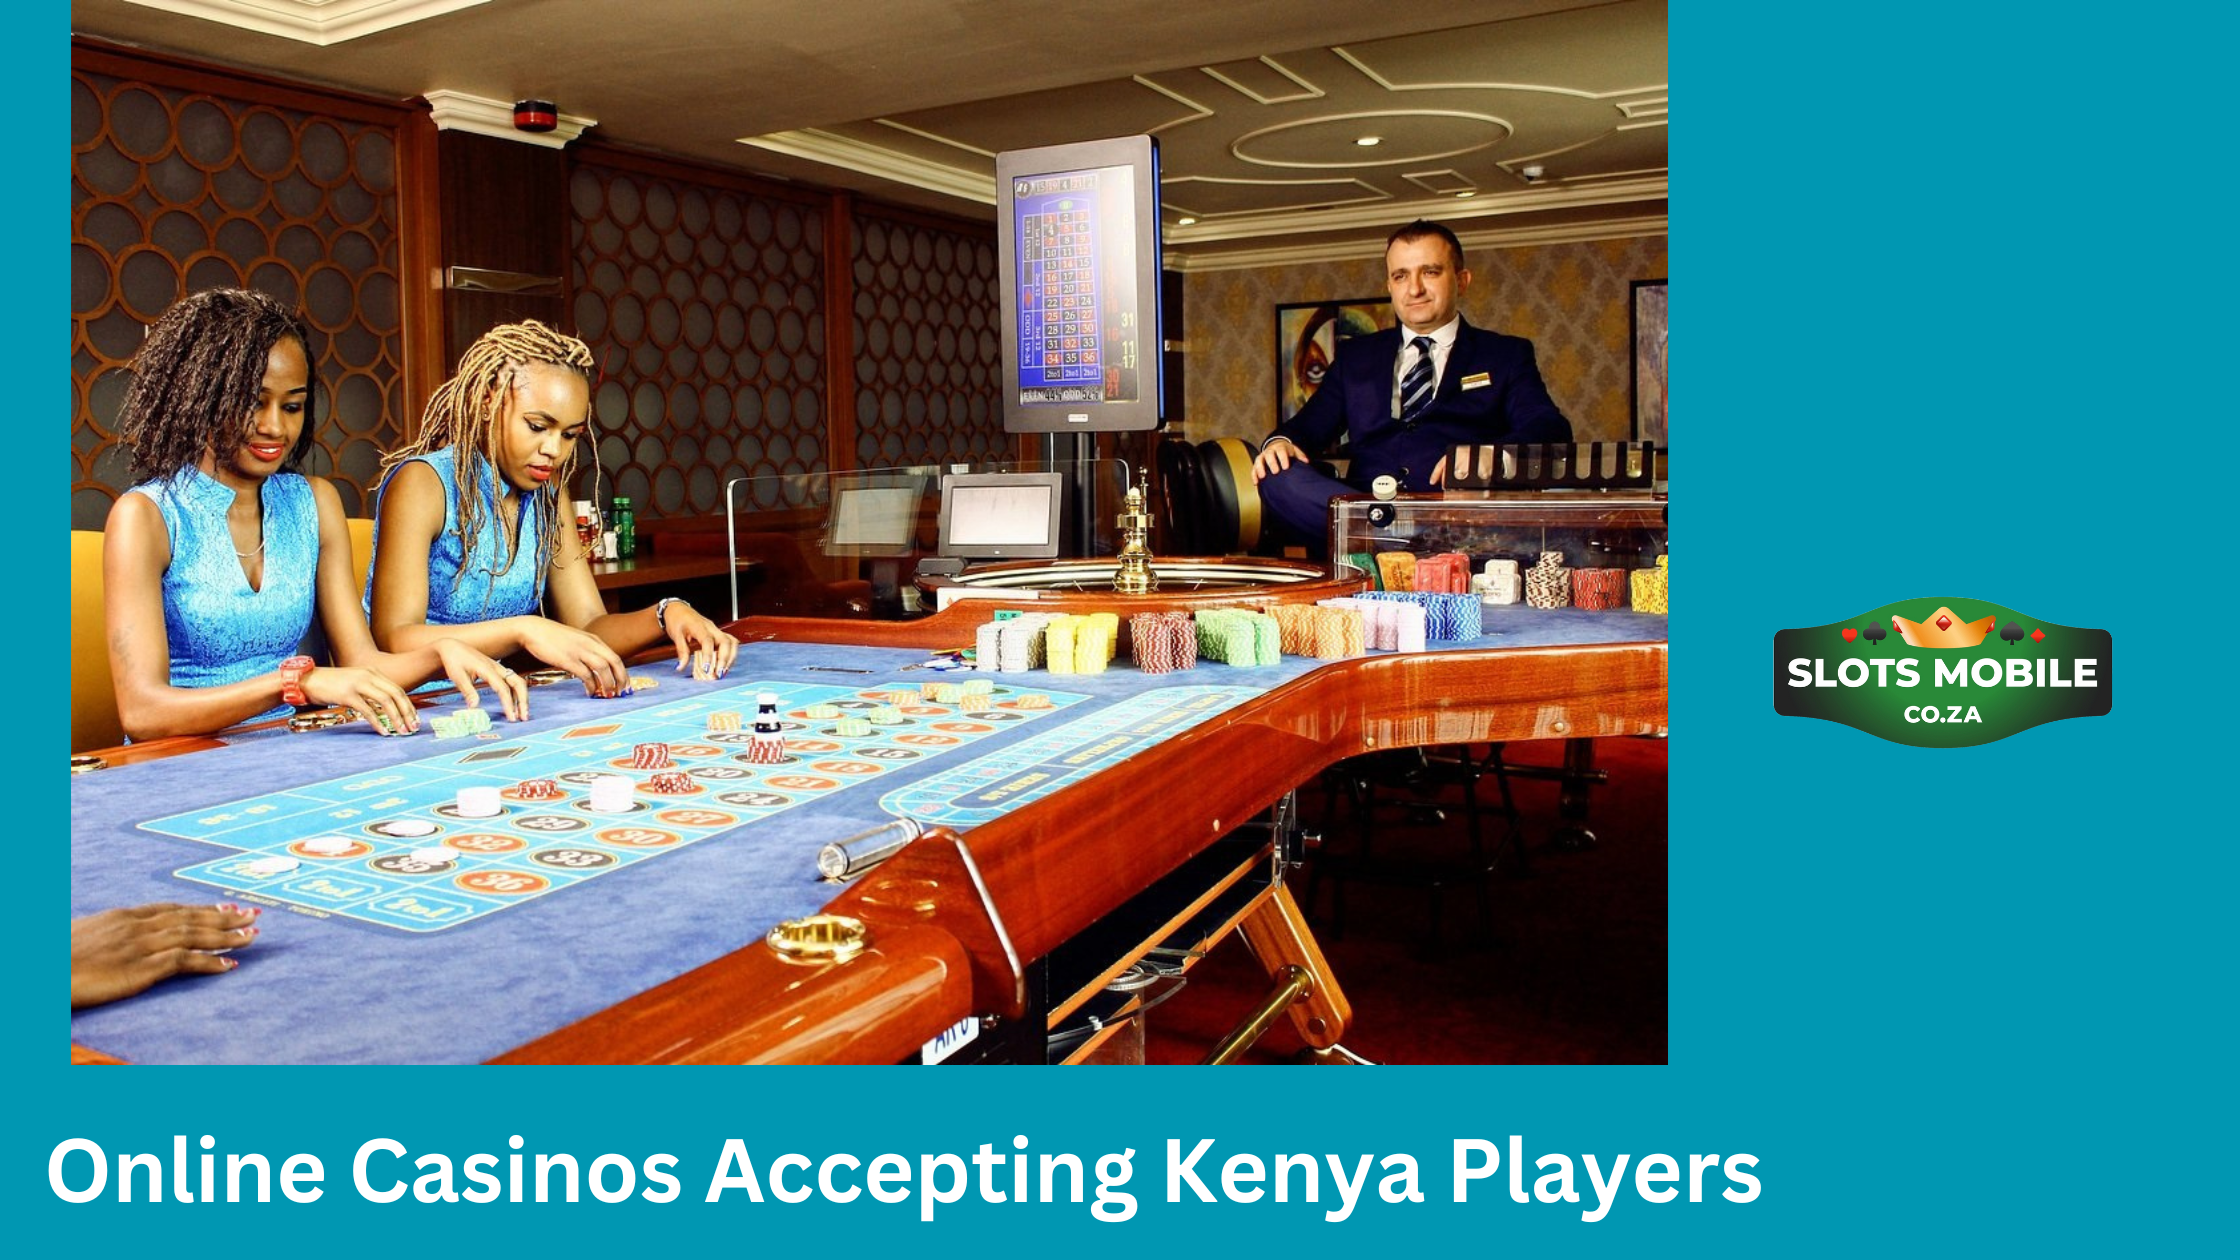 Online Casinos Accepting Kenya Players